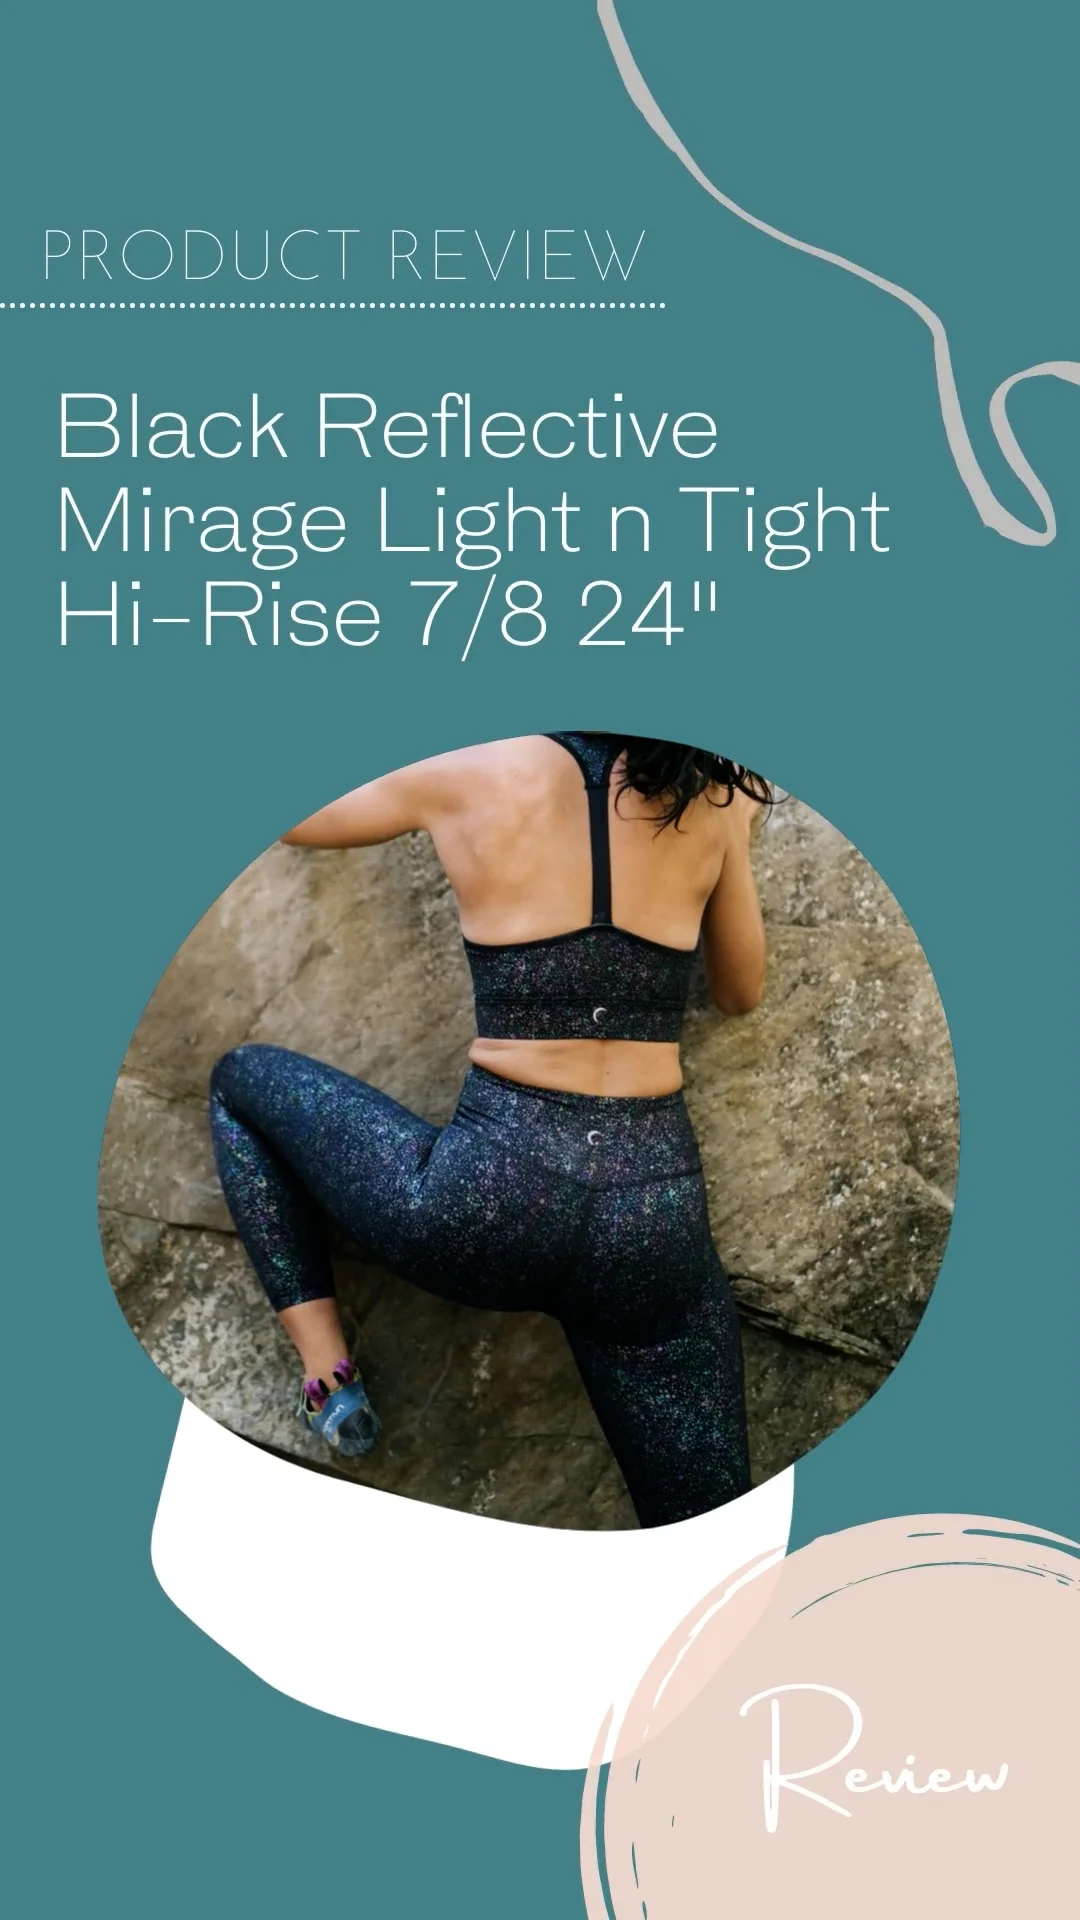 Black Reflective Mirage Light n Tight Hi-Rise 7/8 24 #5090 on Vimeo